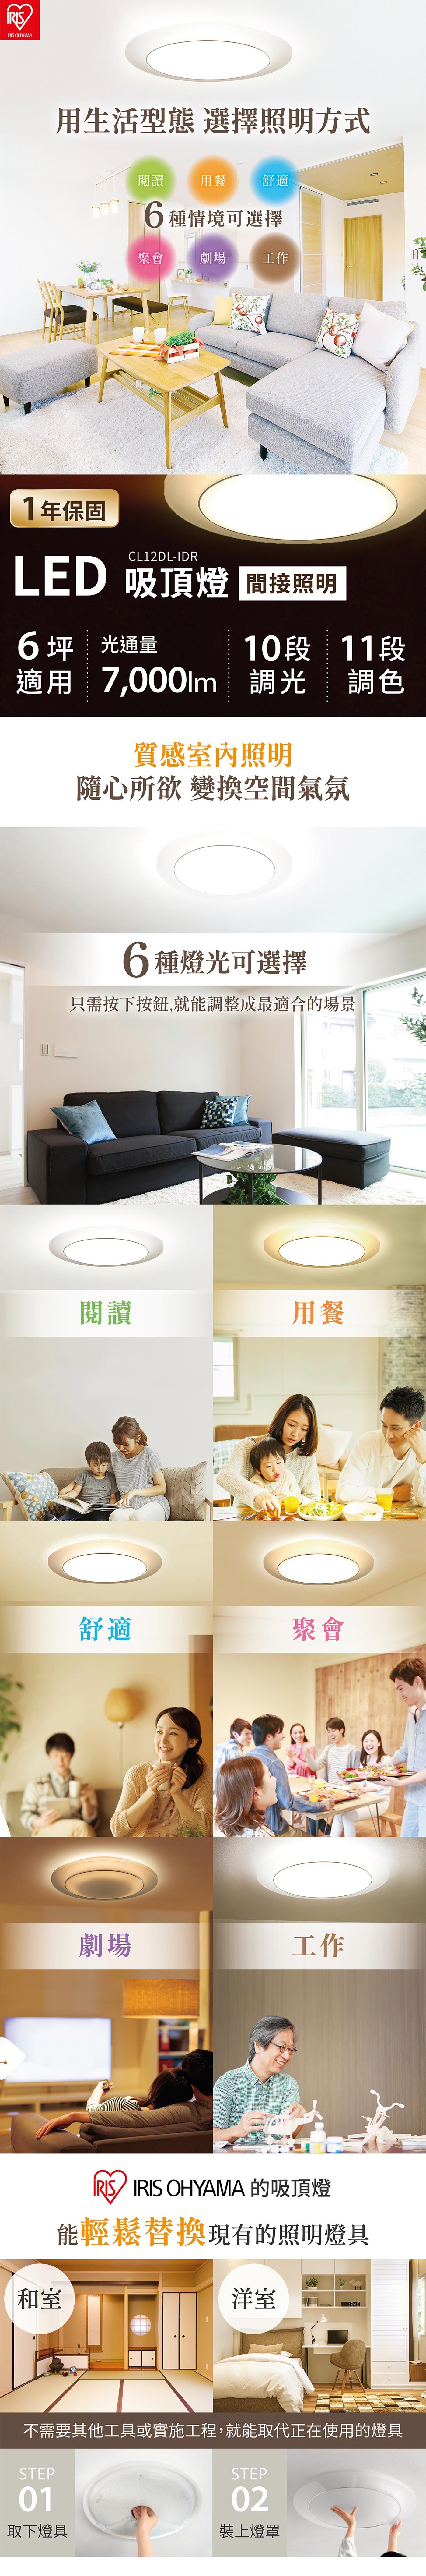 IRIS LED 吸頂燈 CL12DL-IDR 間接照明款，6坪適用，亮度10段可調，光色11段可調，雙重照明設計，可自由調整間接照明與直接照明的燈光，發光效率改善，更加的省電。